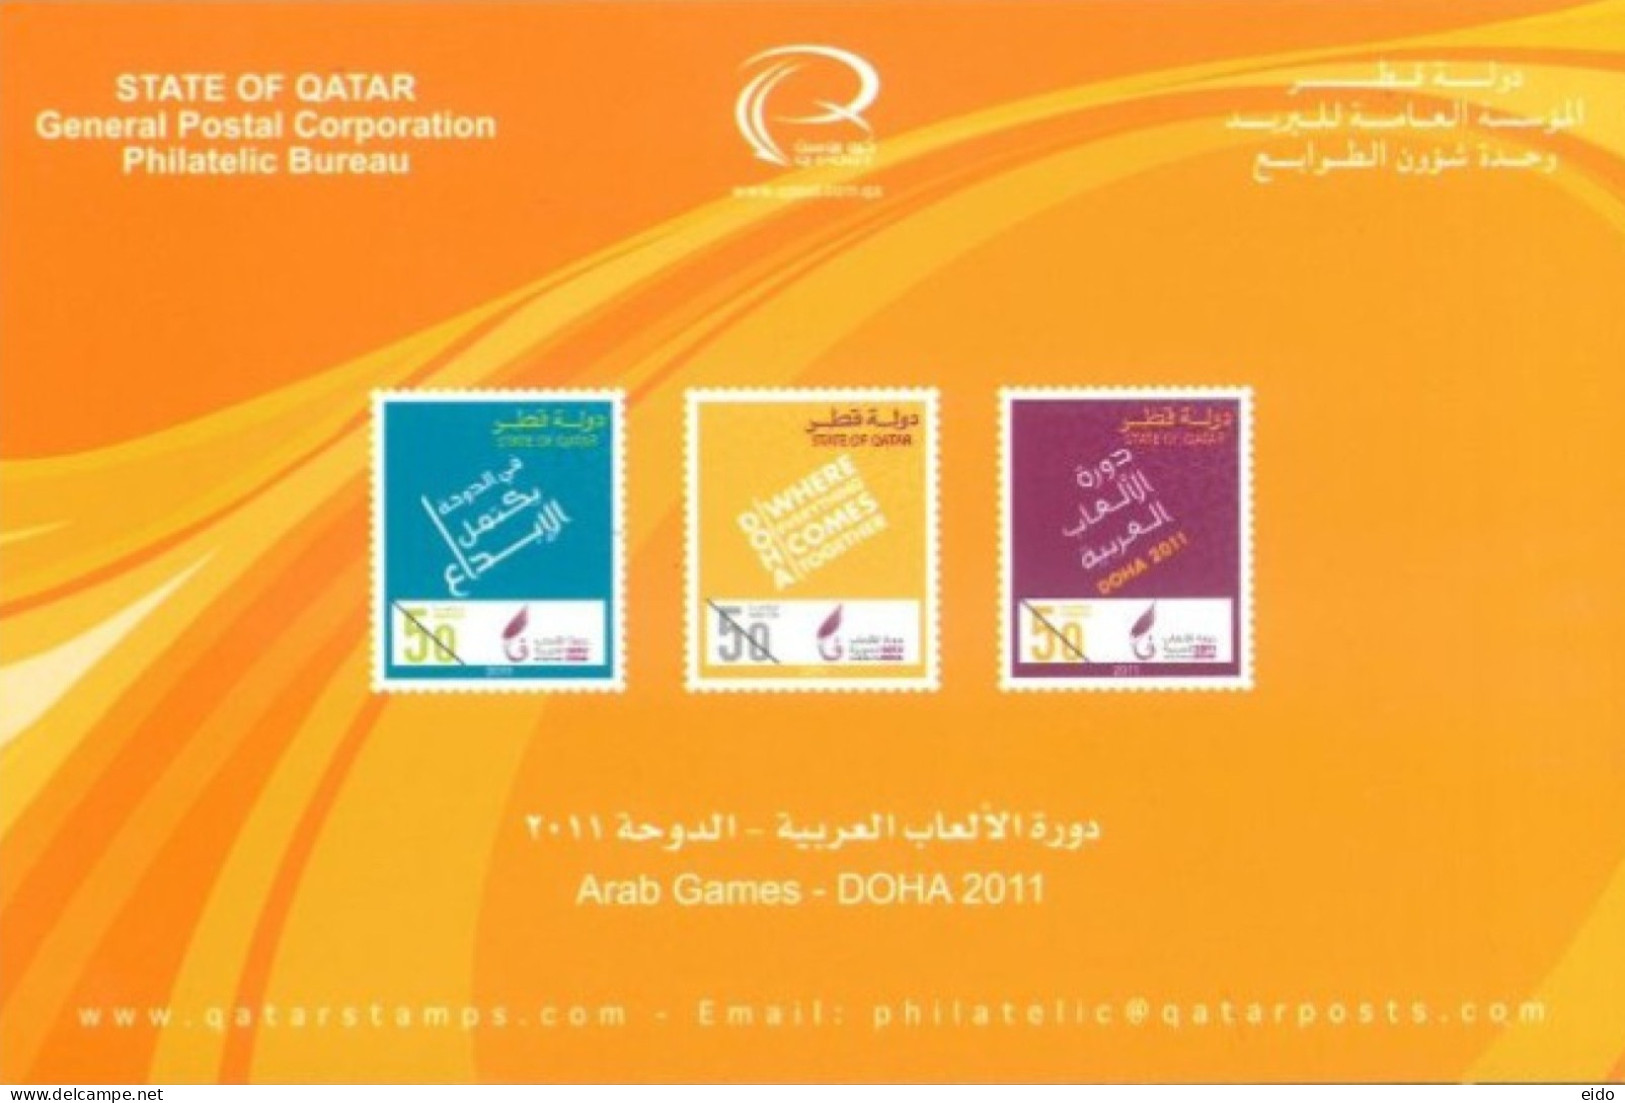 QATAR  - 2011, POSTAL STAMPS BULETIN OF ARAB GAMES - DOHA  AND TECHNICAL DETAILS. - Qatar